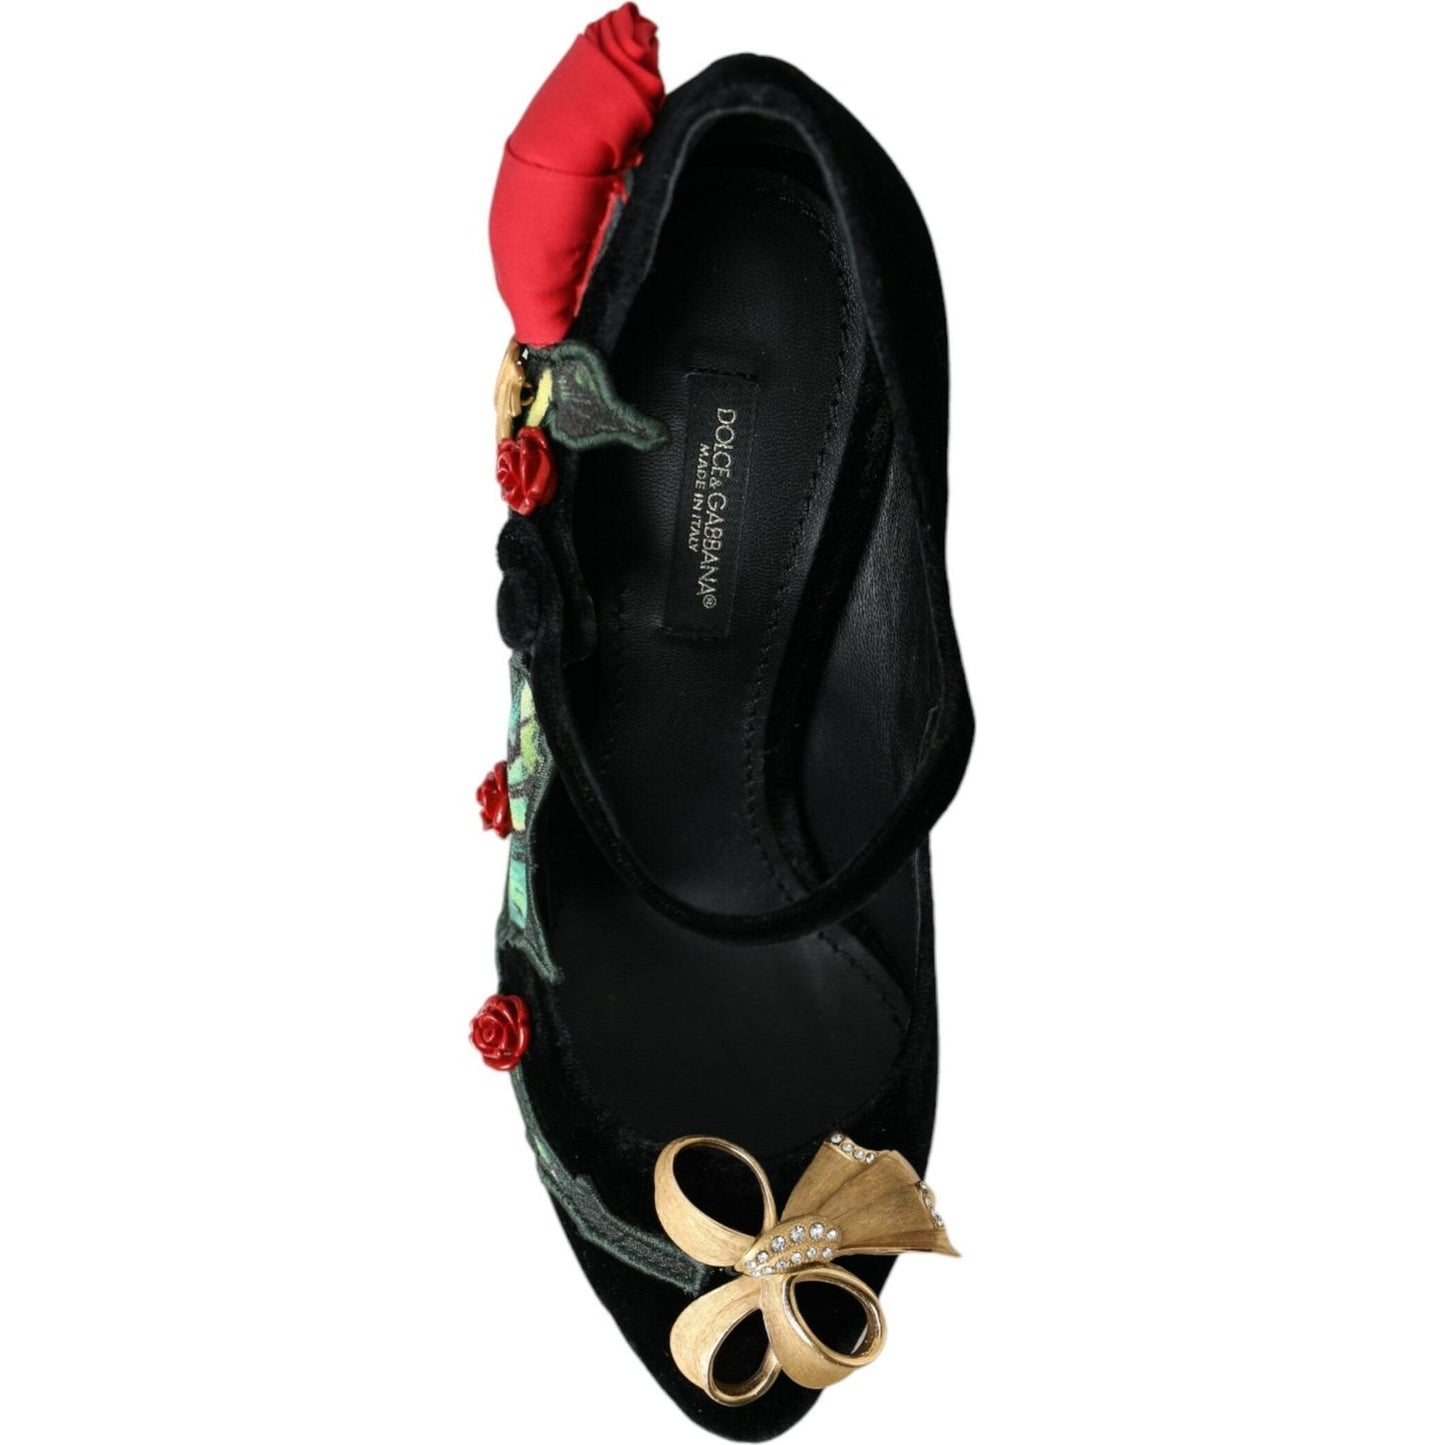 Dolce & Gabbana Black Roses Crystal Brooch Mary Jane Shoes black-roses-crystal-brooch-mary-jane-shoes